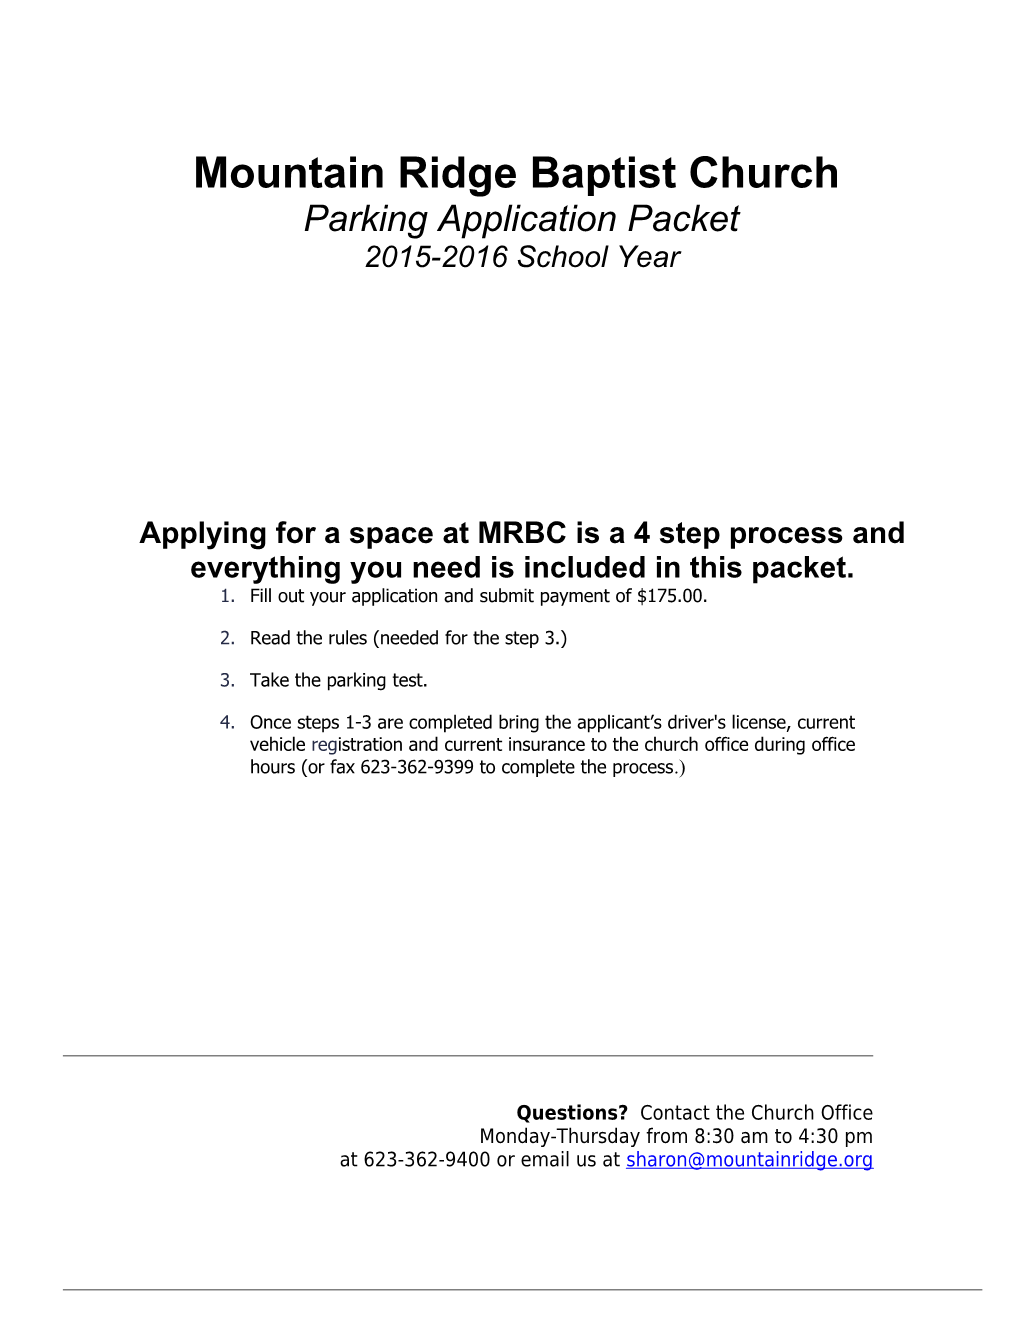 Mountain Ridge Baptist Church Parking Permit Application